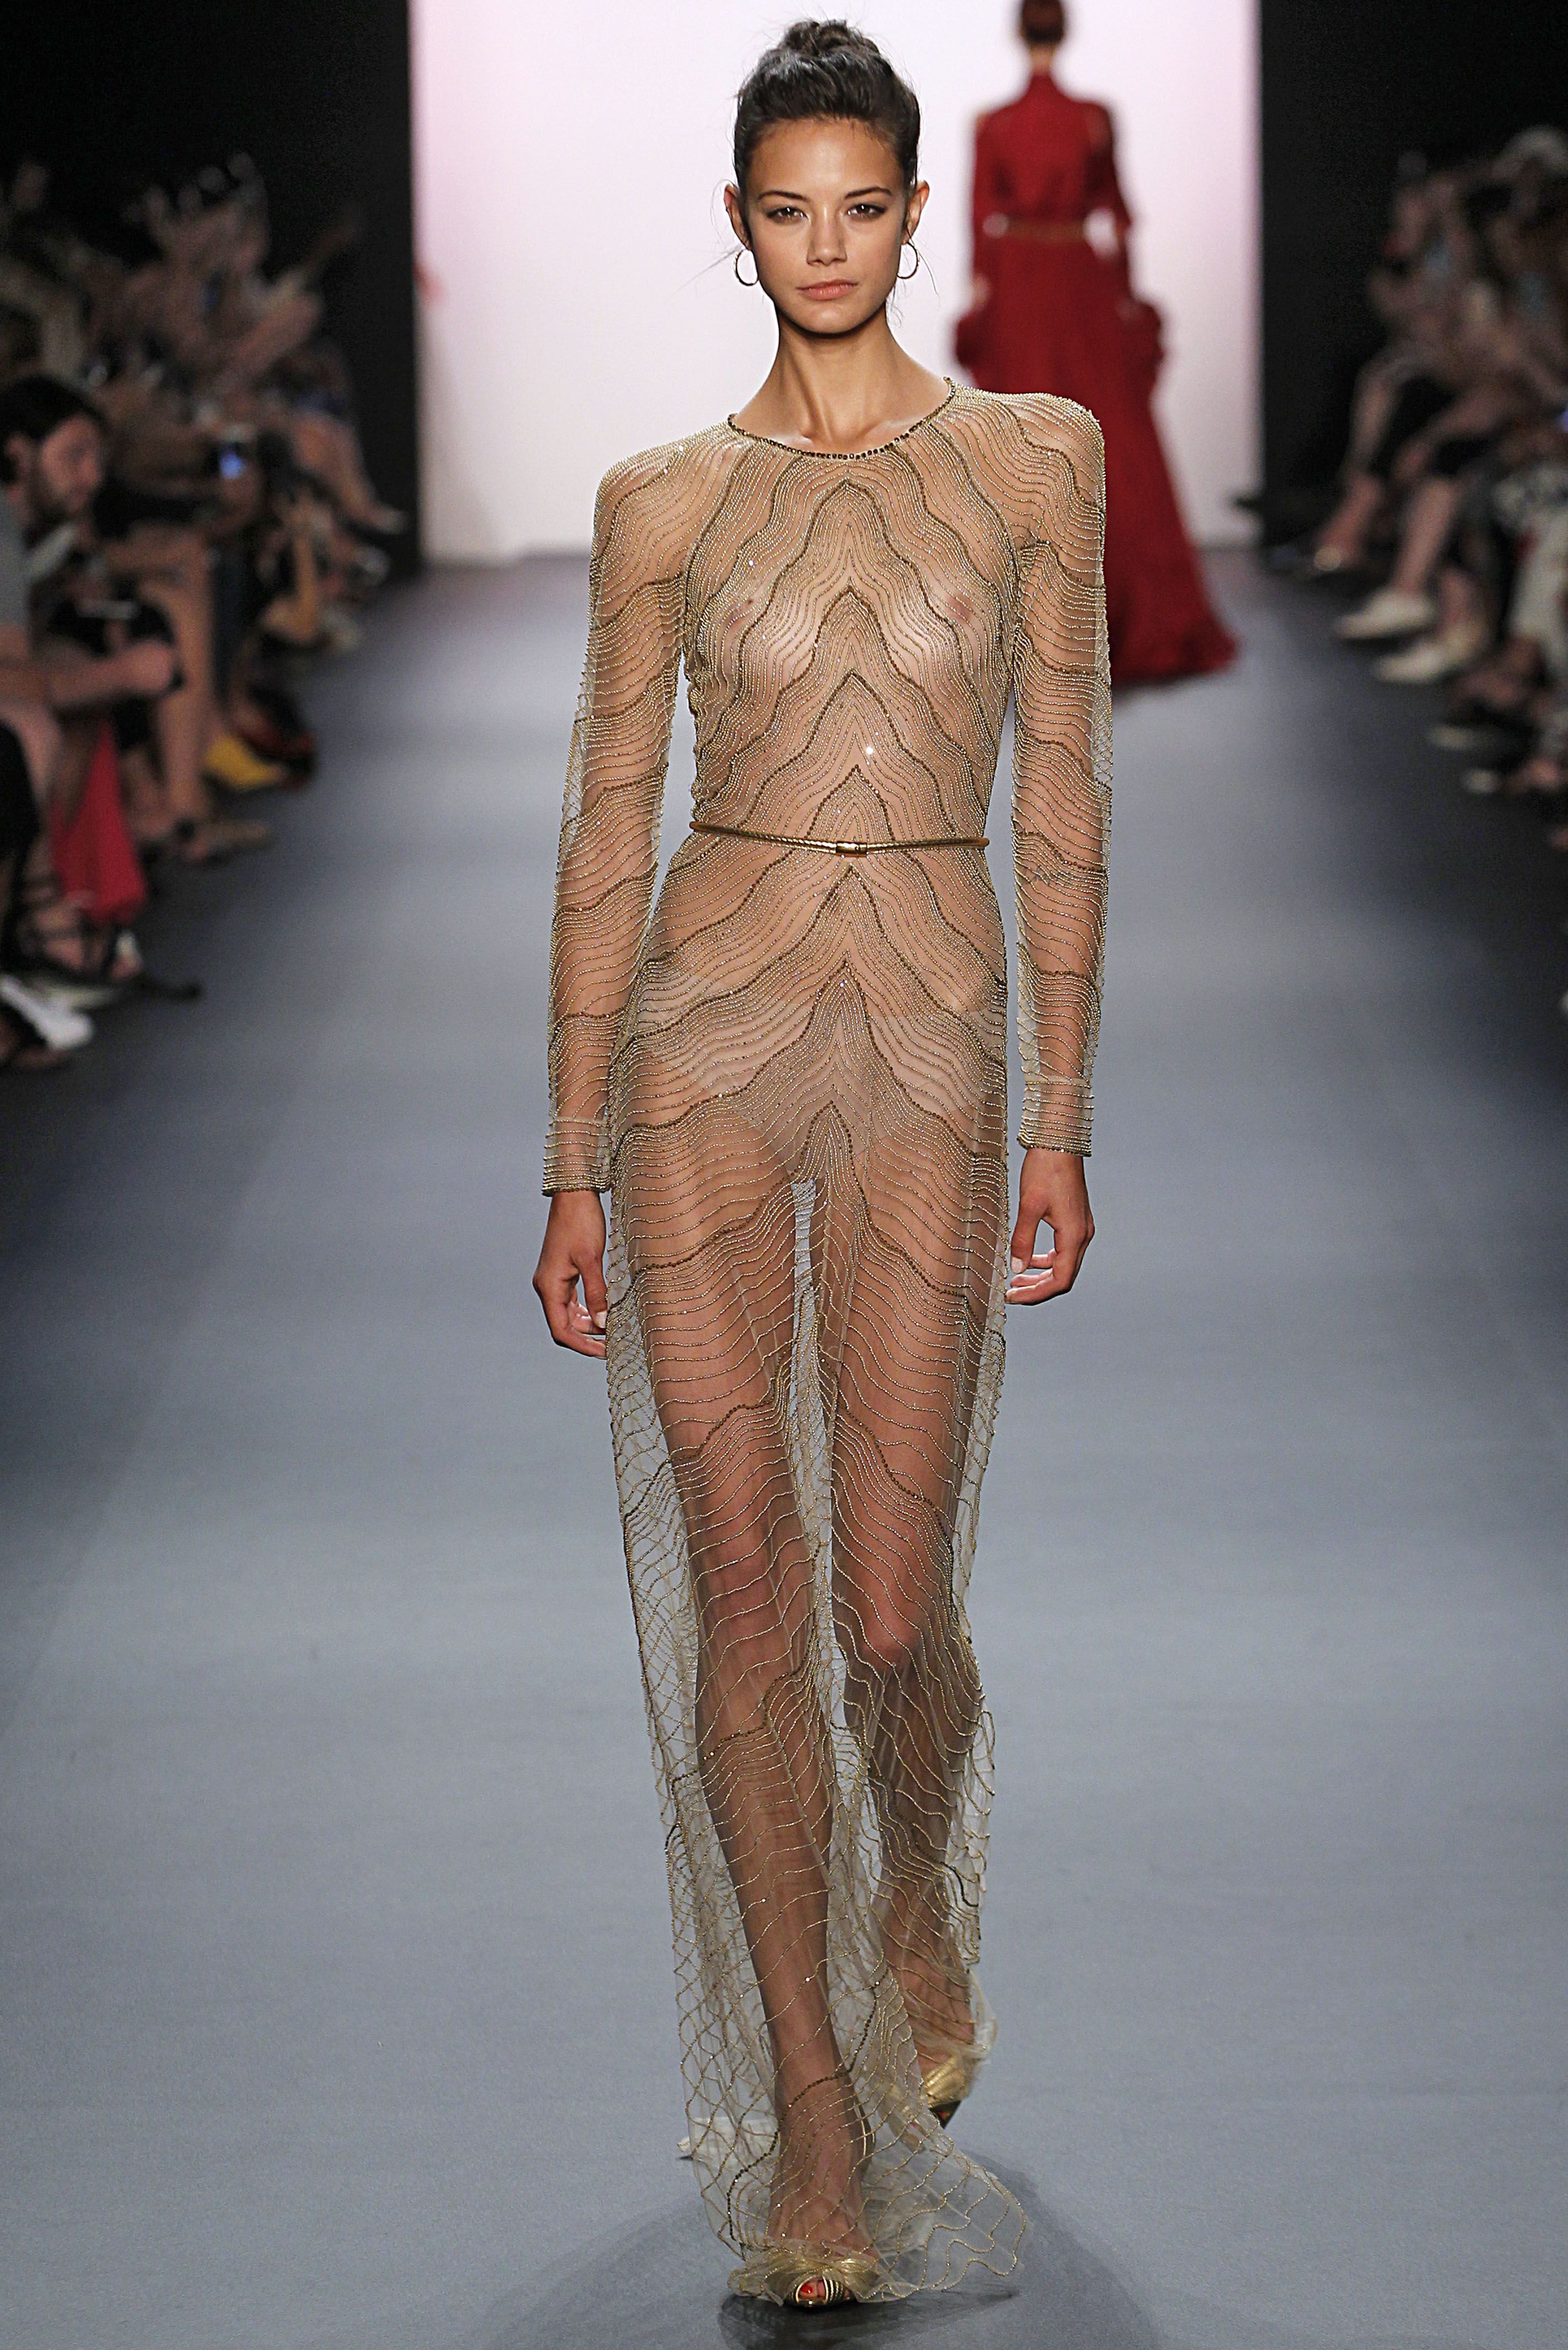 Fashion runway nude